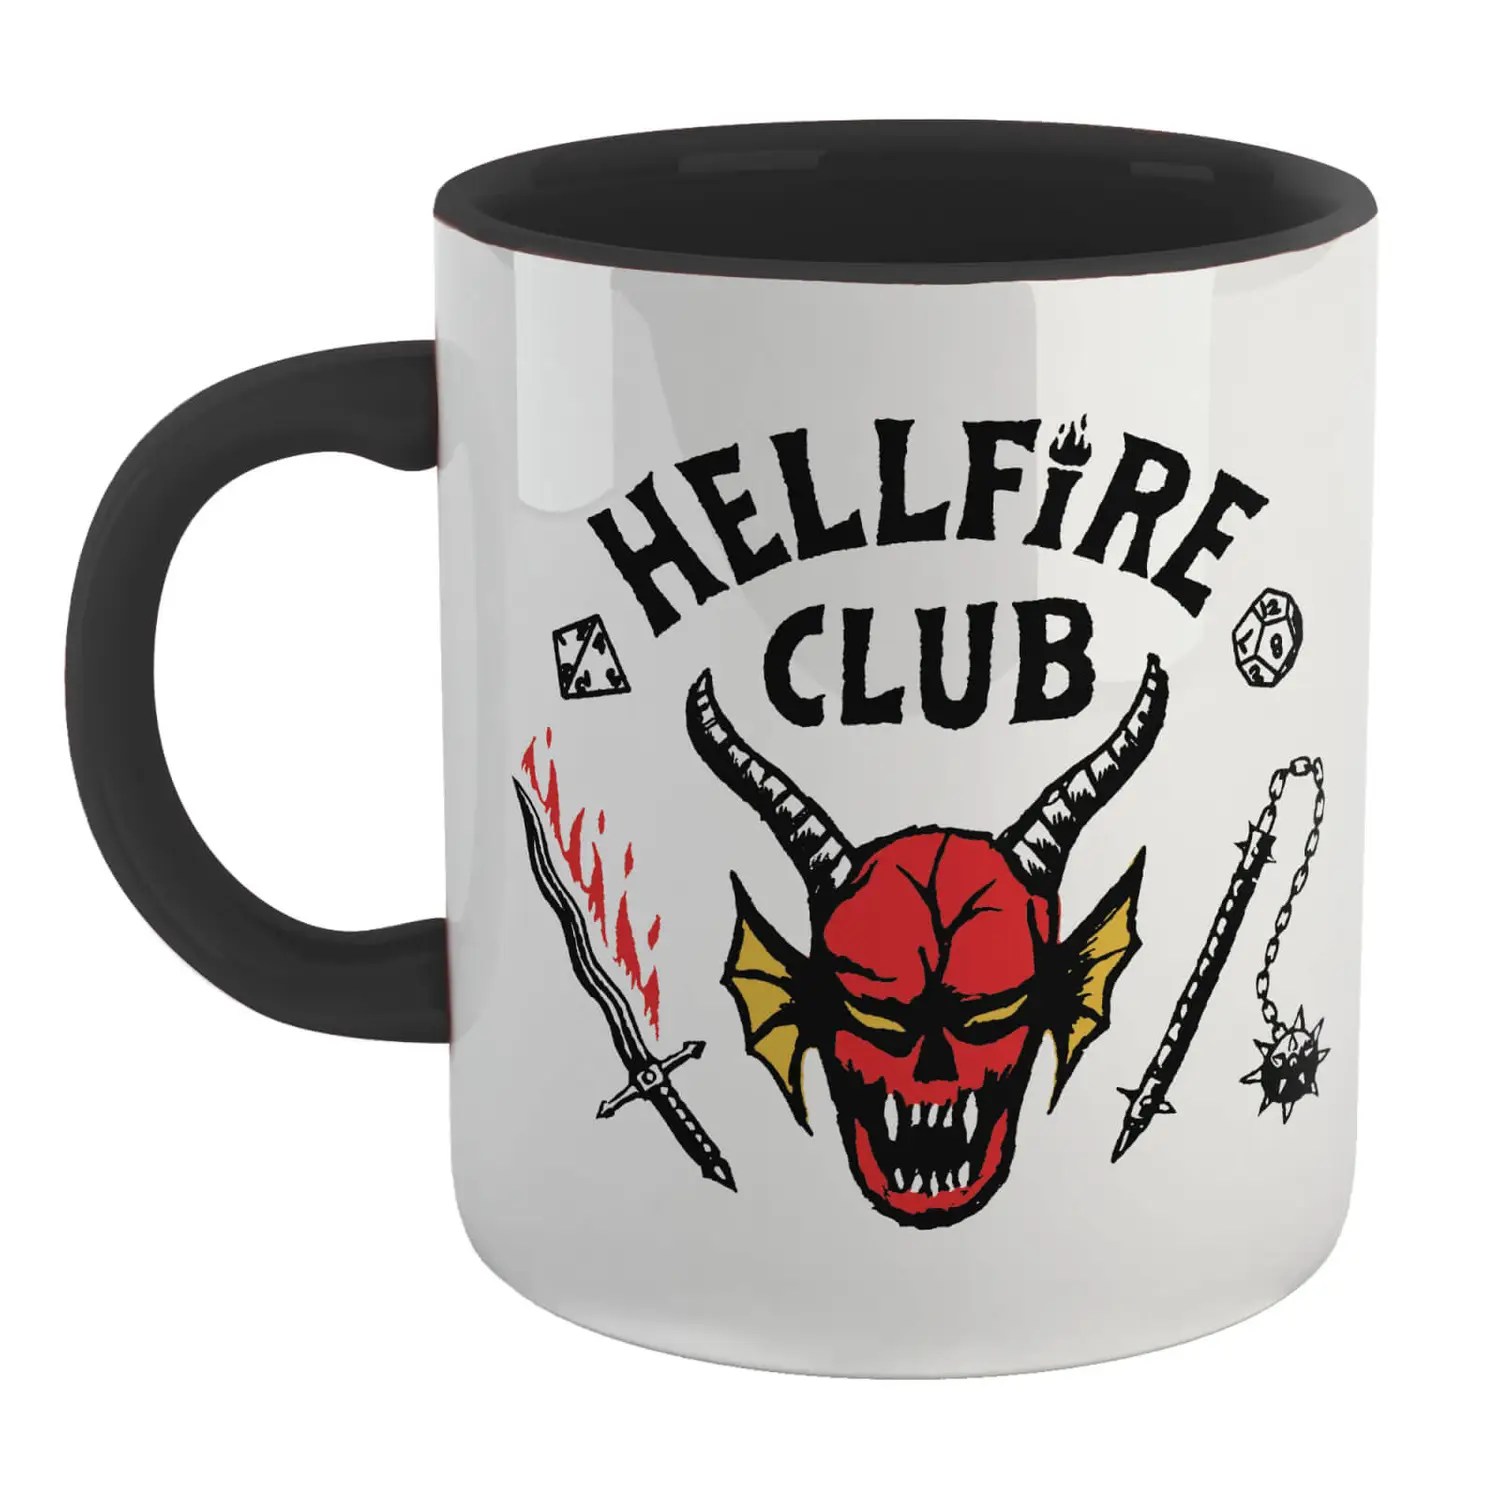 A Hellfire Club mug.